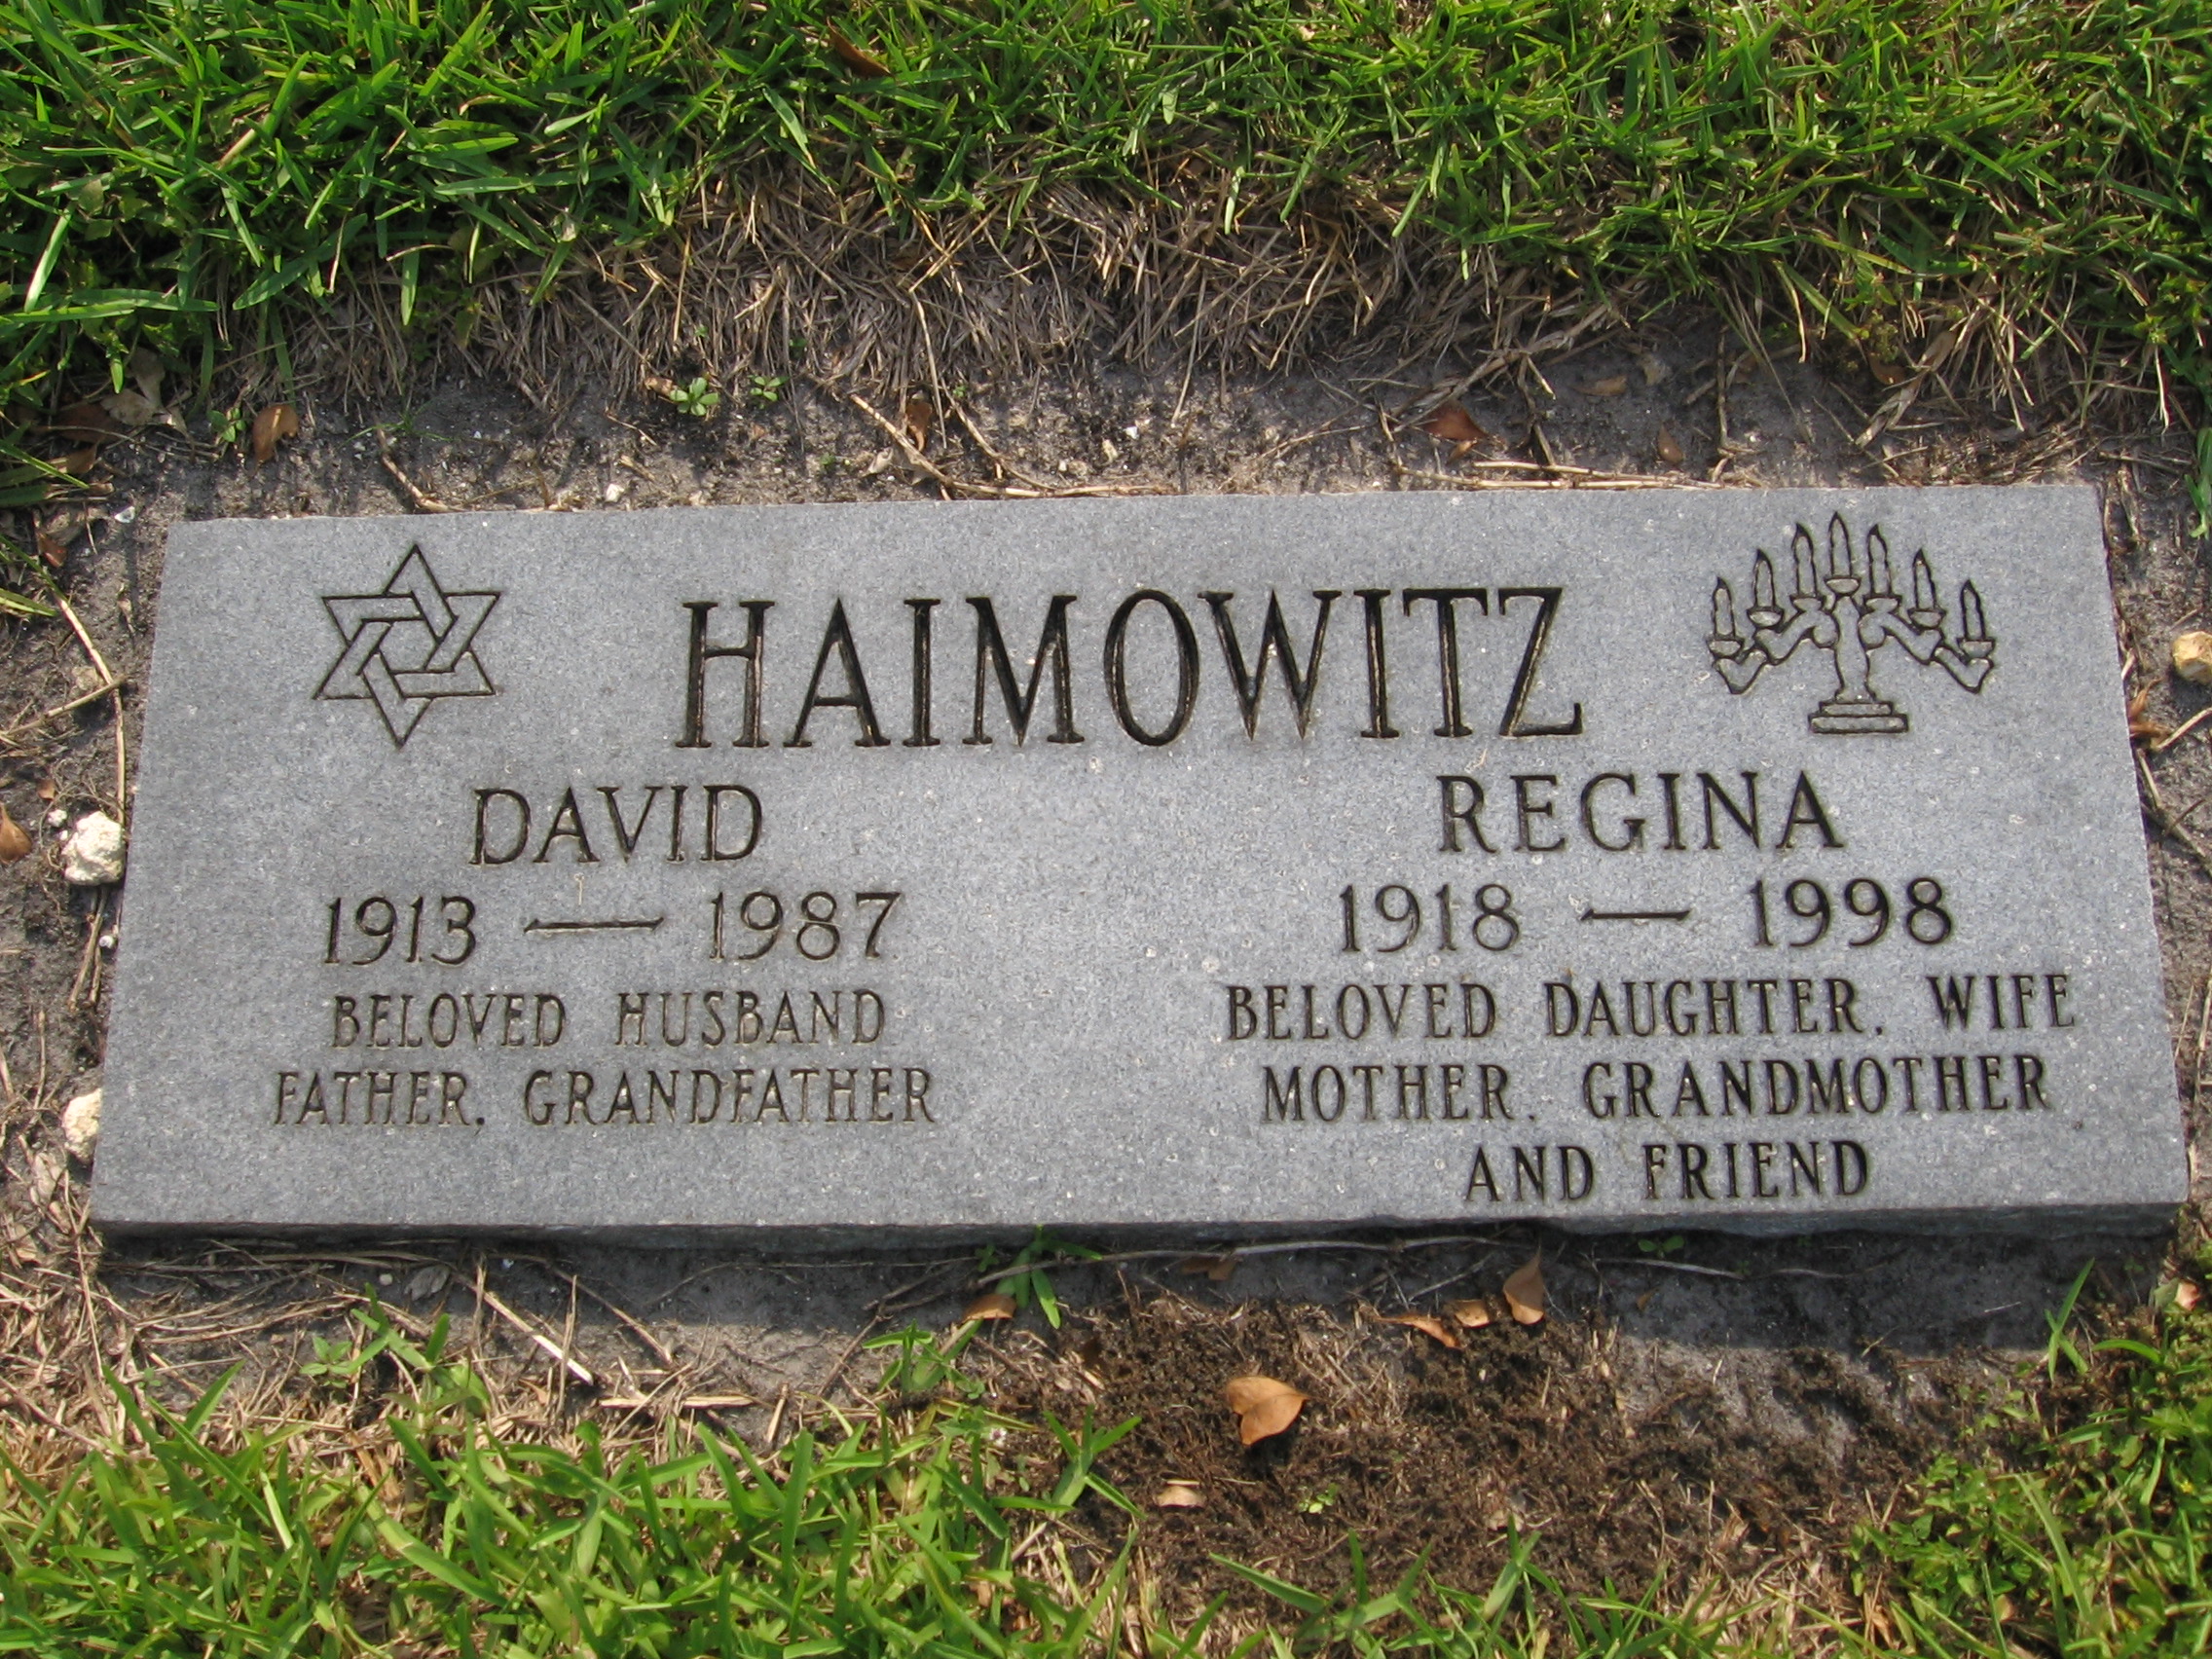 David Haimowitz